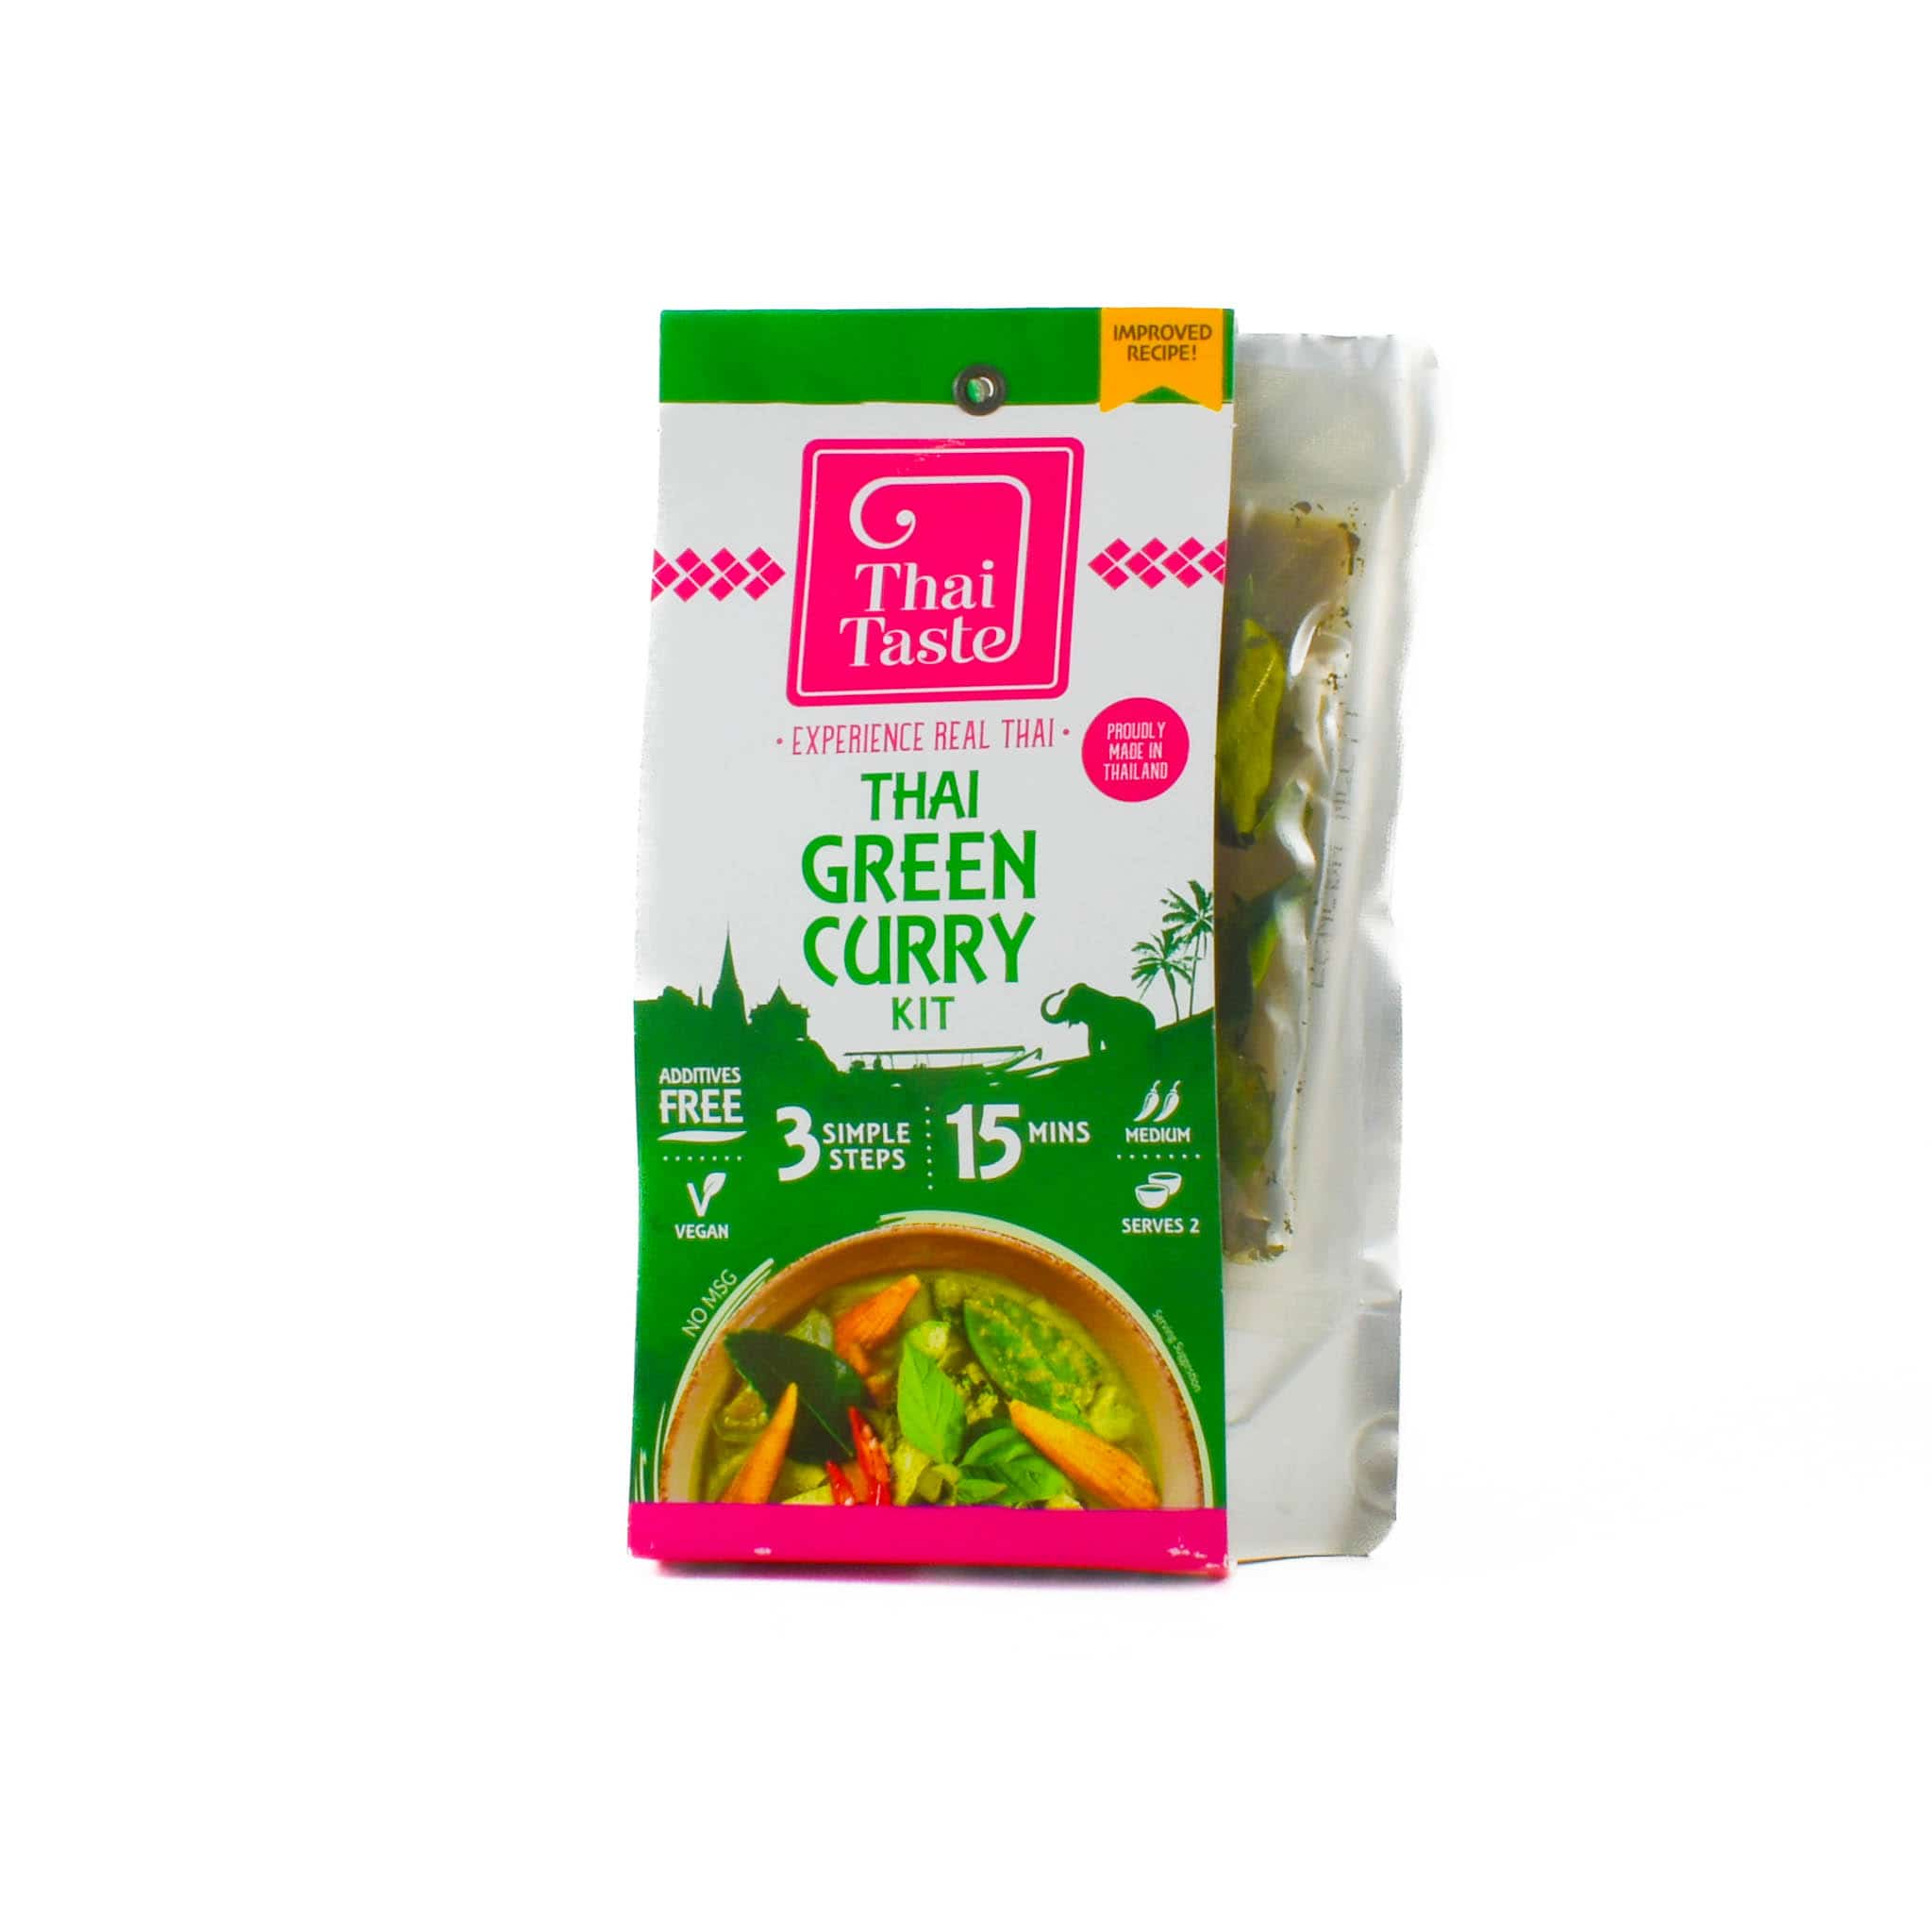 Thai Taste Thai Green Curry Kit (Sleeve) 233g